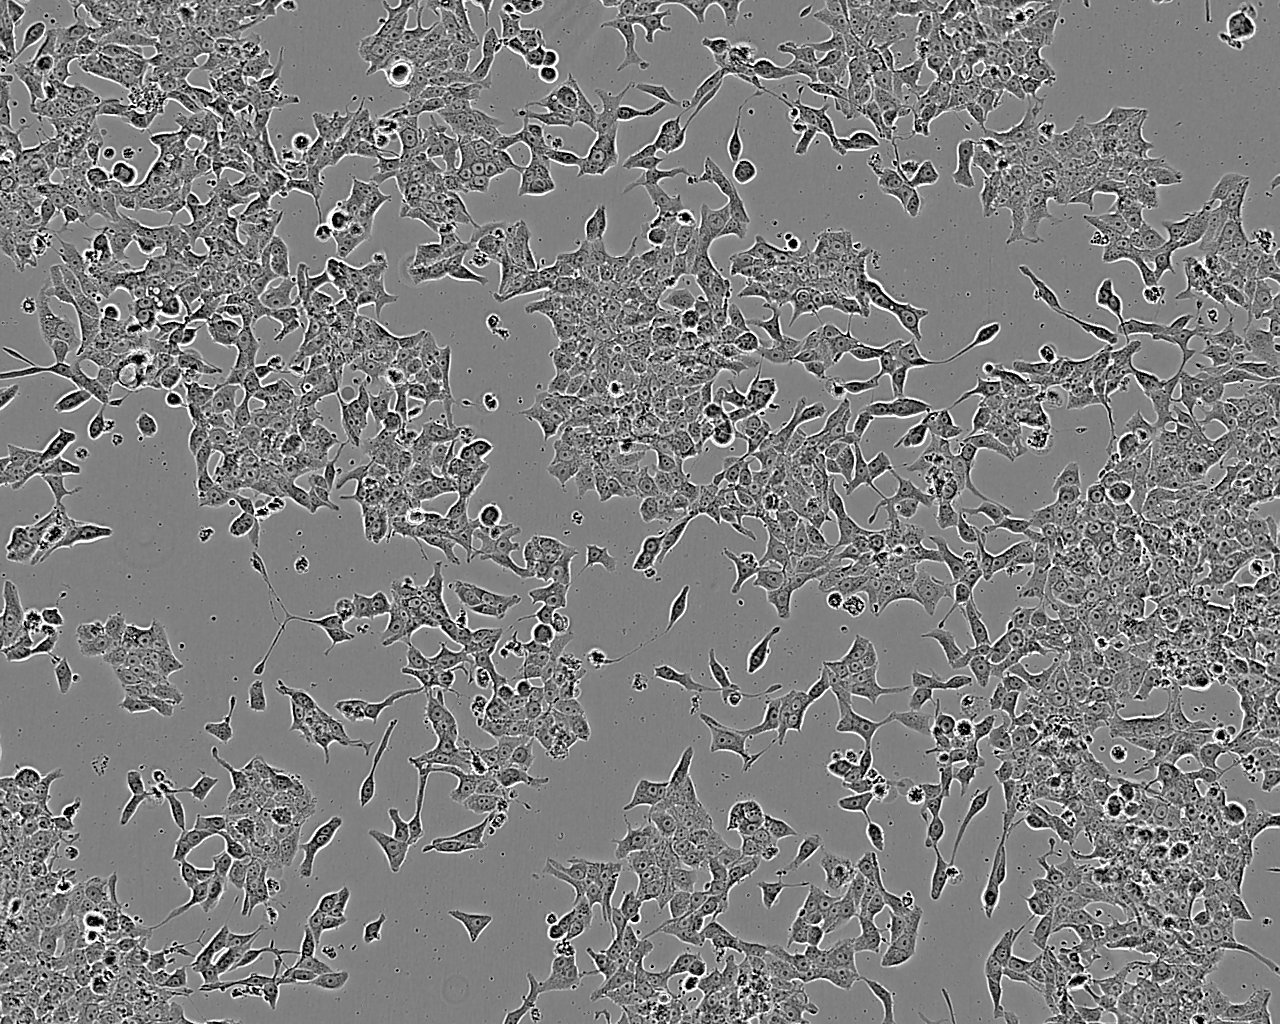 NCI-H2347 epithelioid cells人非小细胞肺癌细胞系,NCI-H2347 epithelioid cells